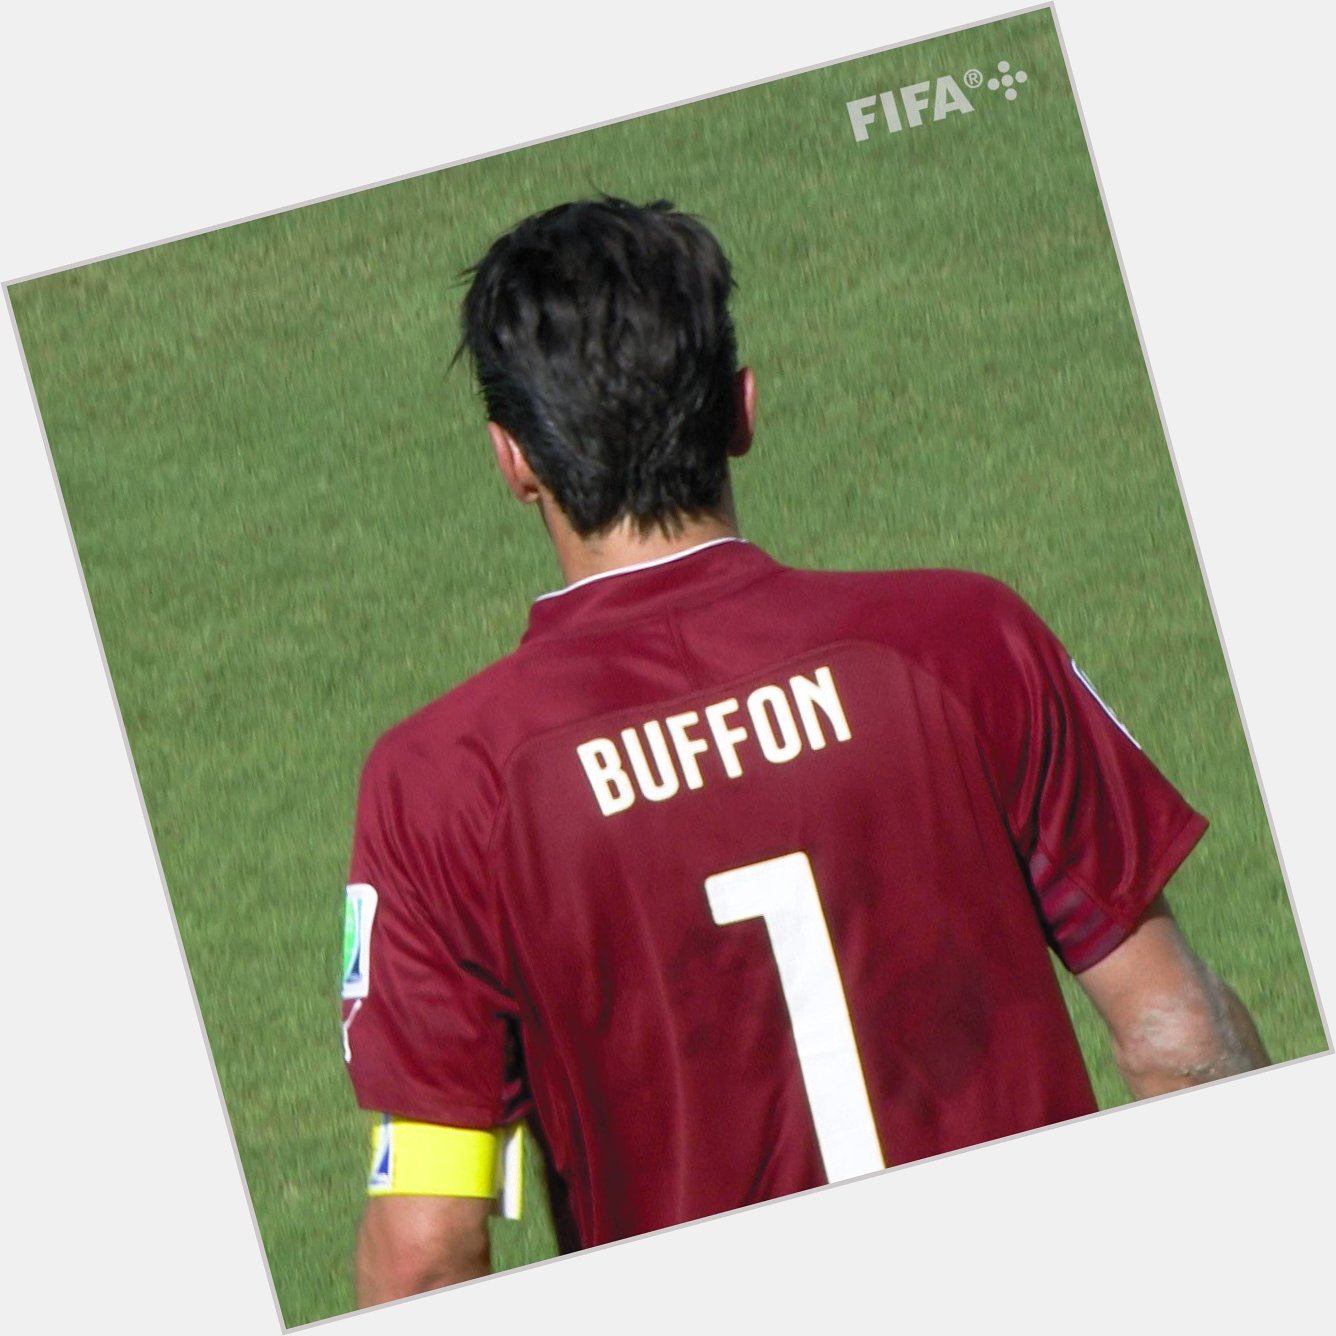 Happy Birthday to a legend of the game, Gianluigi Buffon! 

